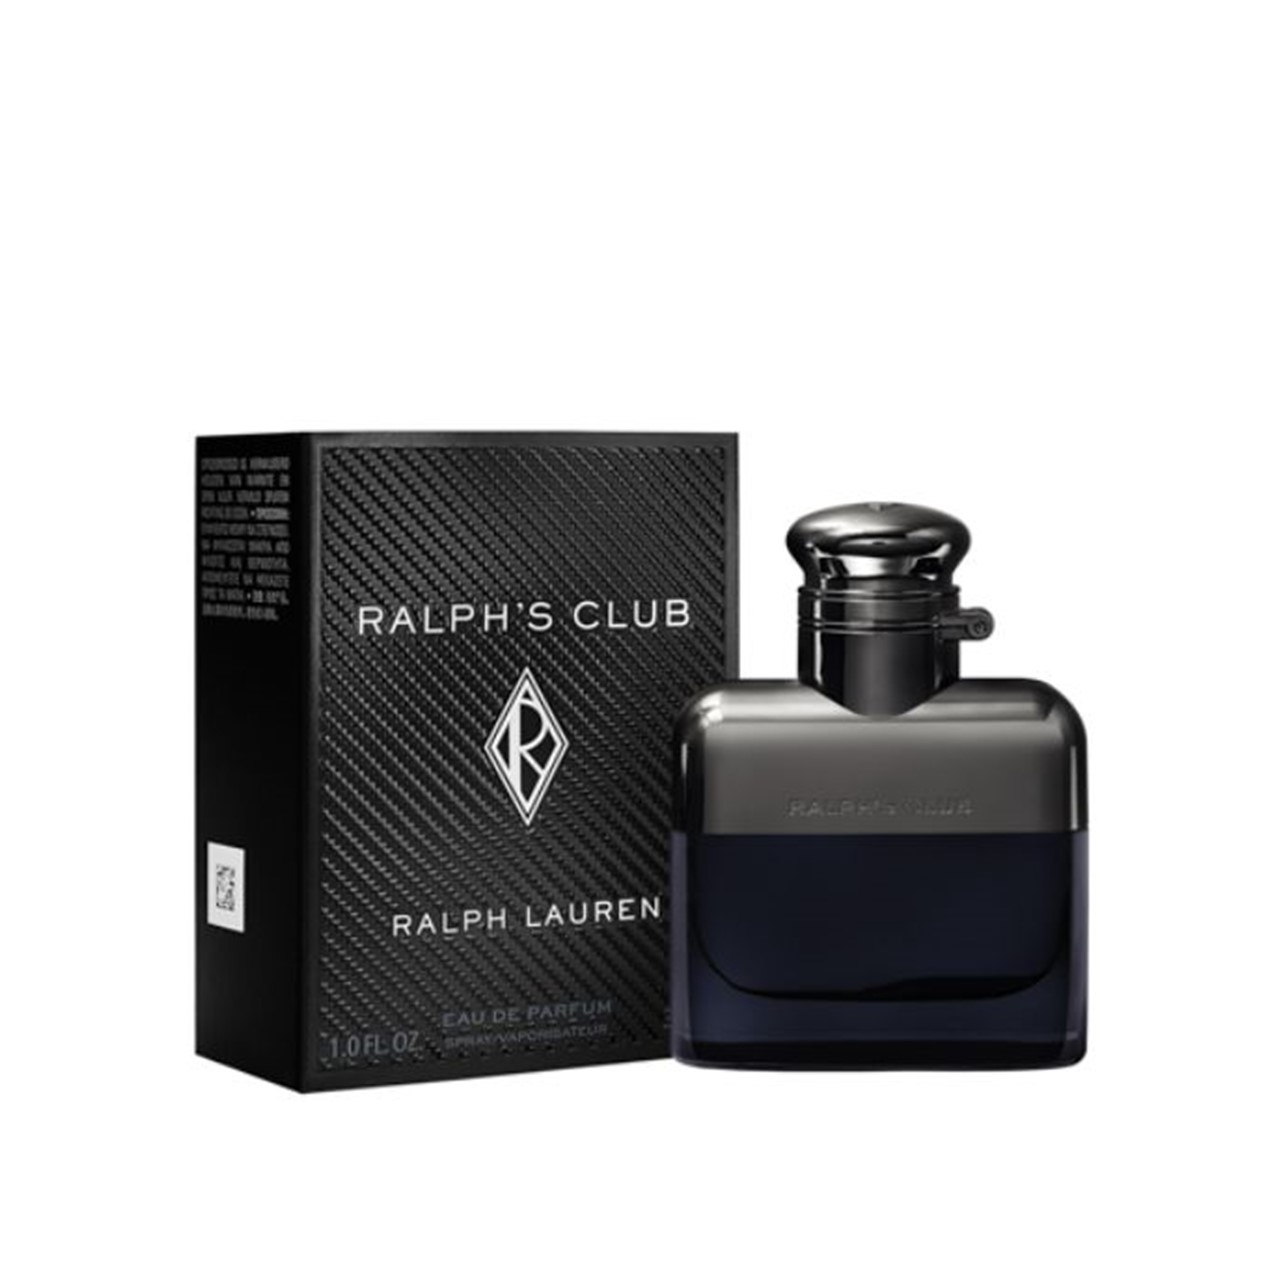 Buy Ralph Lauren Ralph's Club Eau de Parfum For Men 30ml (1.0fl oz) · USA